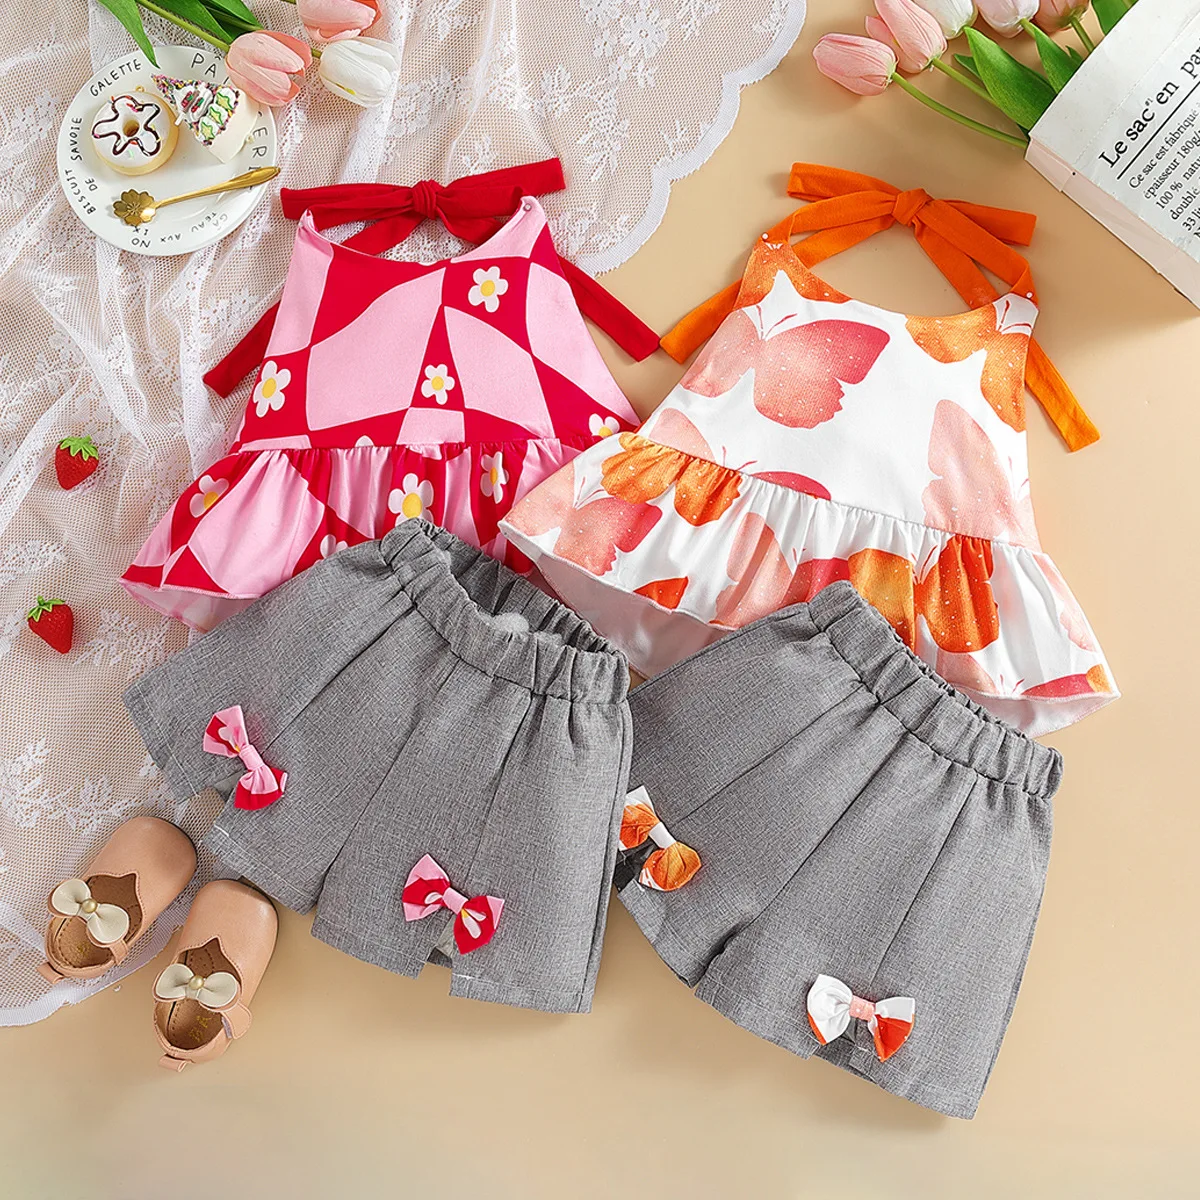 New trendy toddler girls clothing sets summer children's sleeveless shirts+shorts 2pcs clothing kids outfits